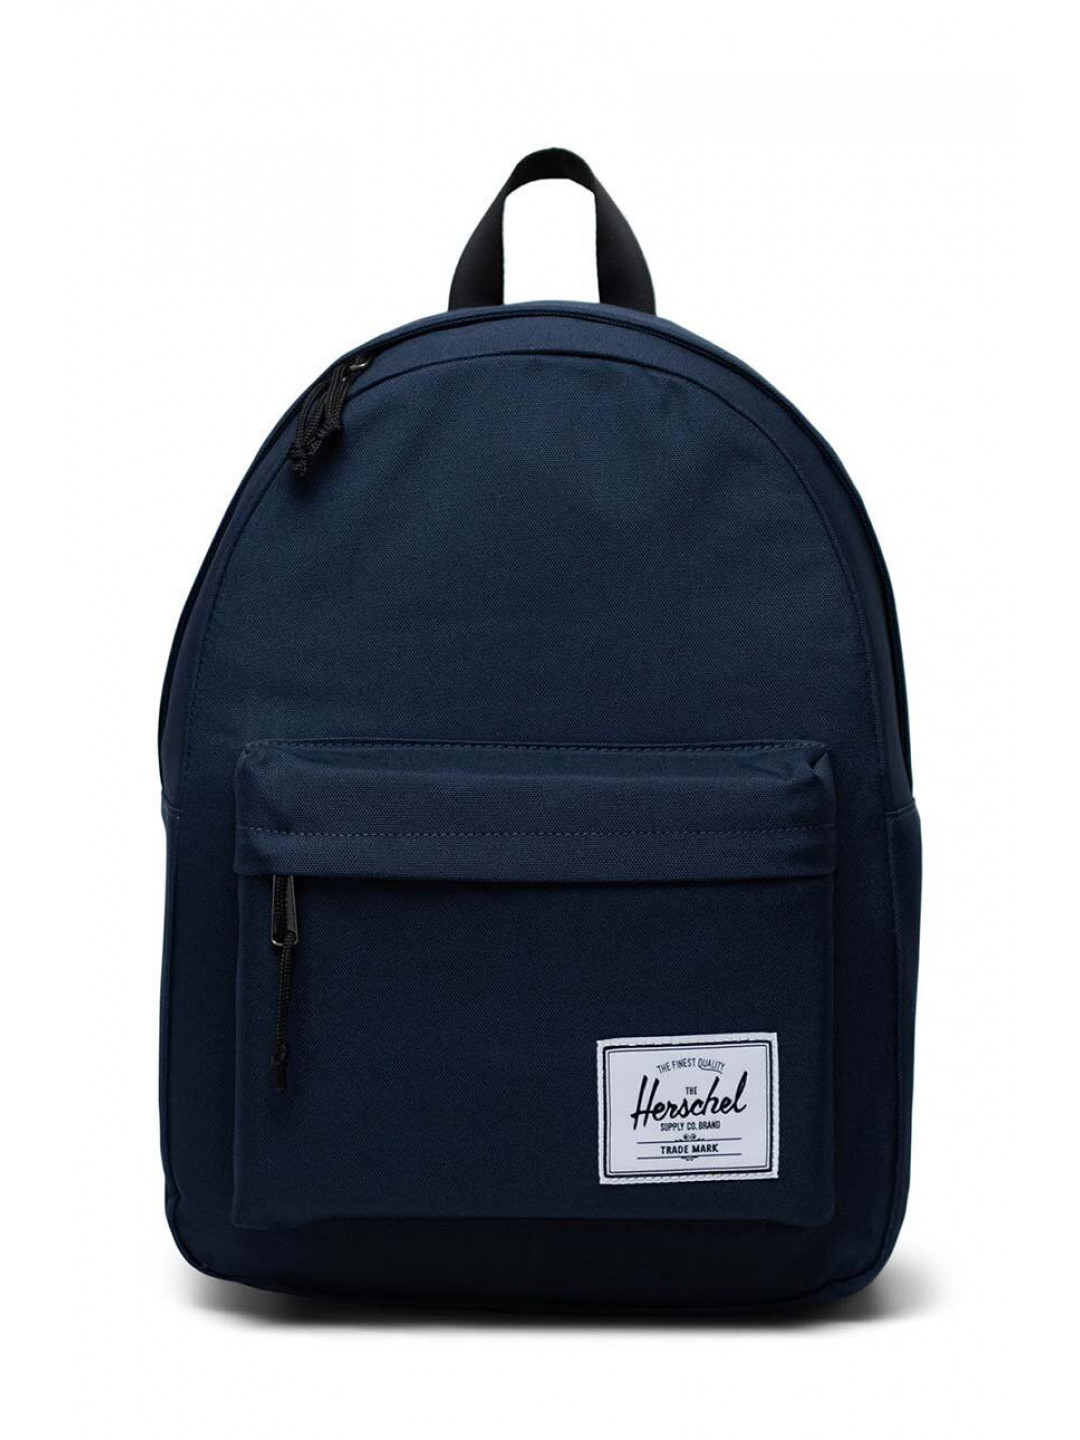 Batoh Herschel Classic Backpack tmavomodrá barva velký hladký